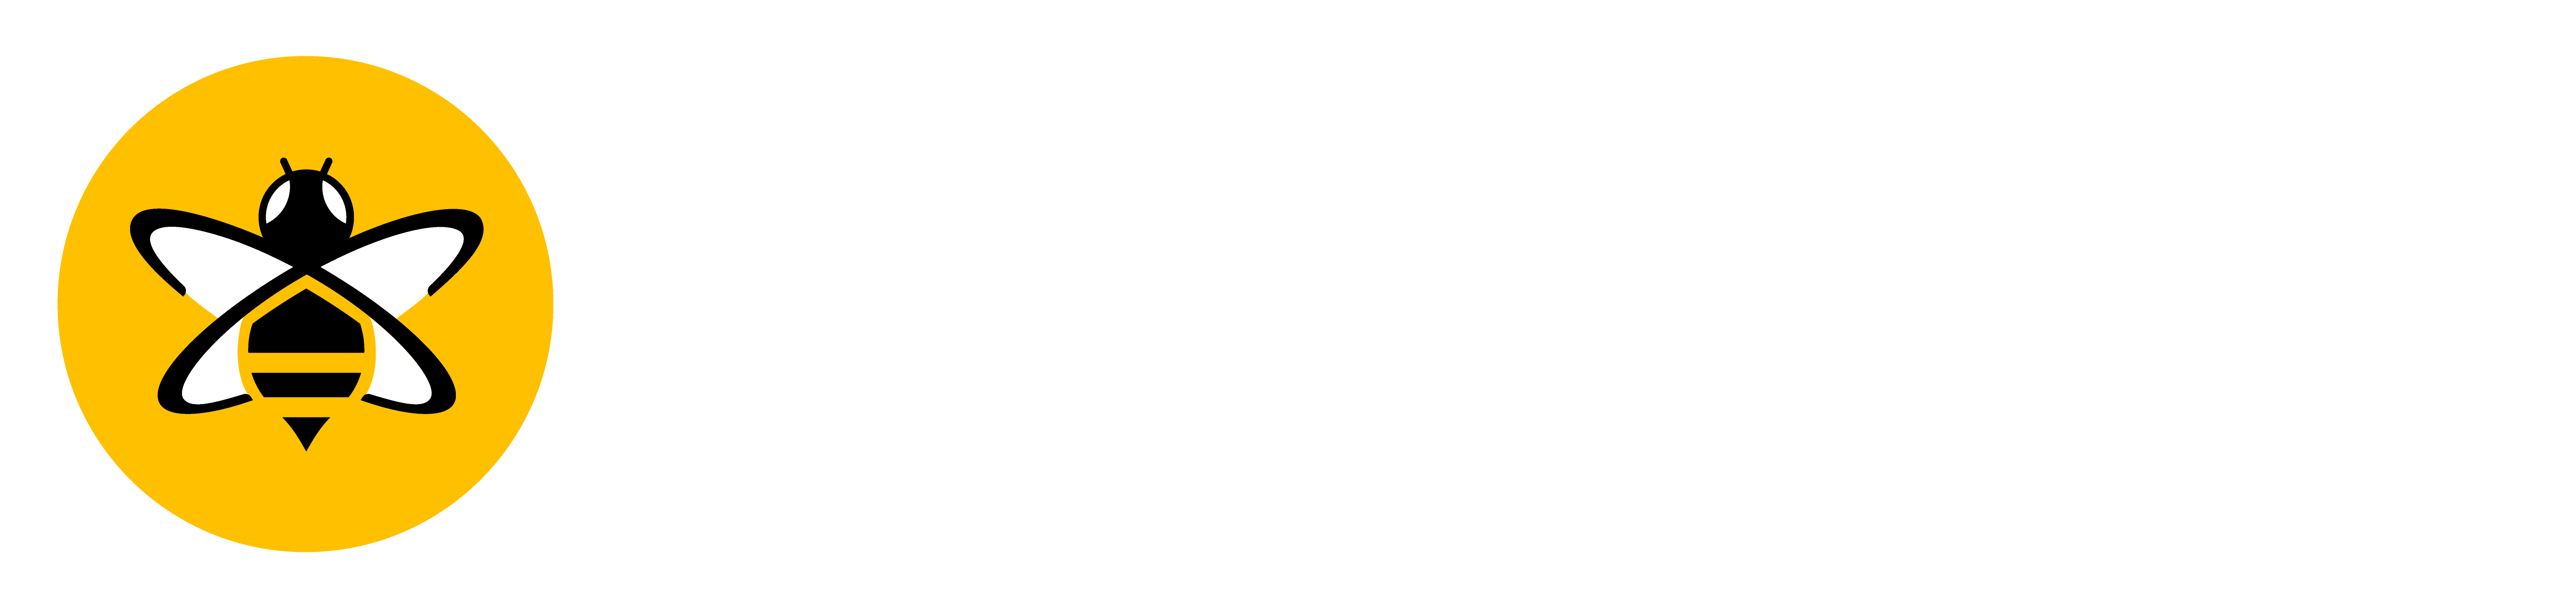 HiveMQ Logo Negative